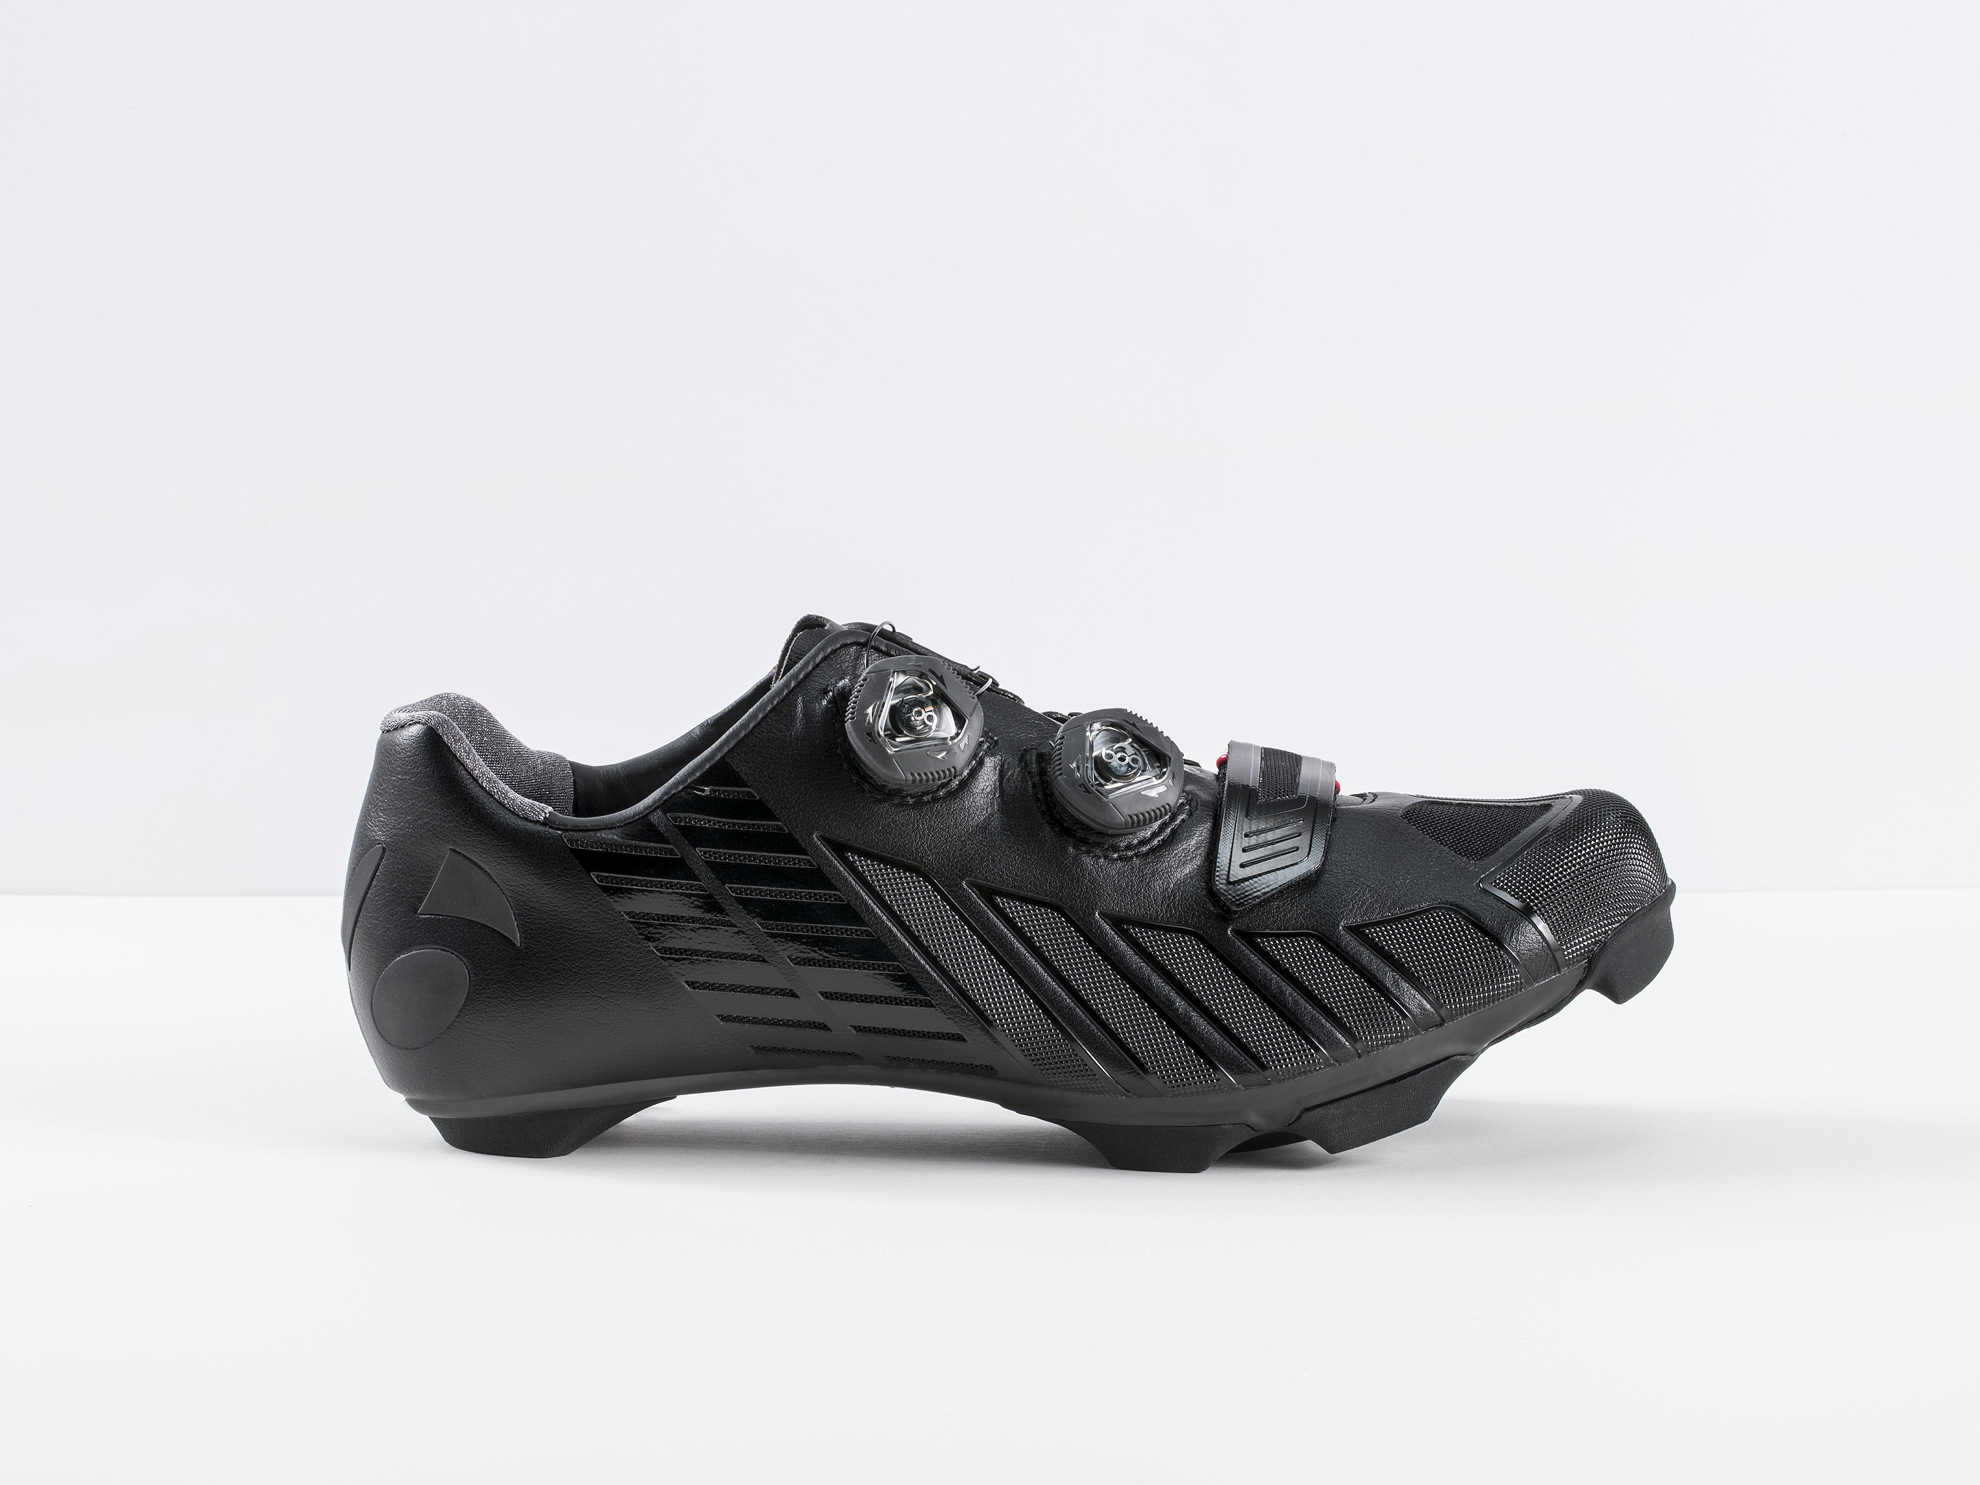 Bontrager XXX MTB Shoe | Cycling shoes | Cycling apparel | Apparel